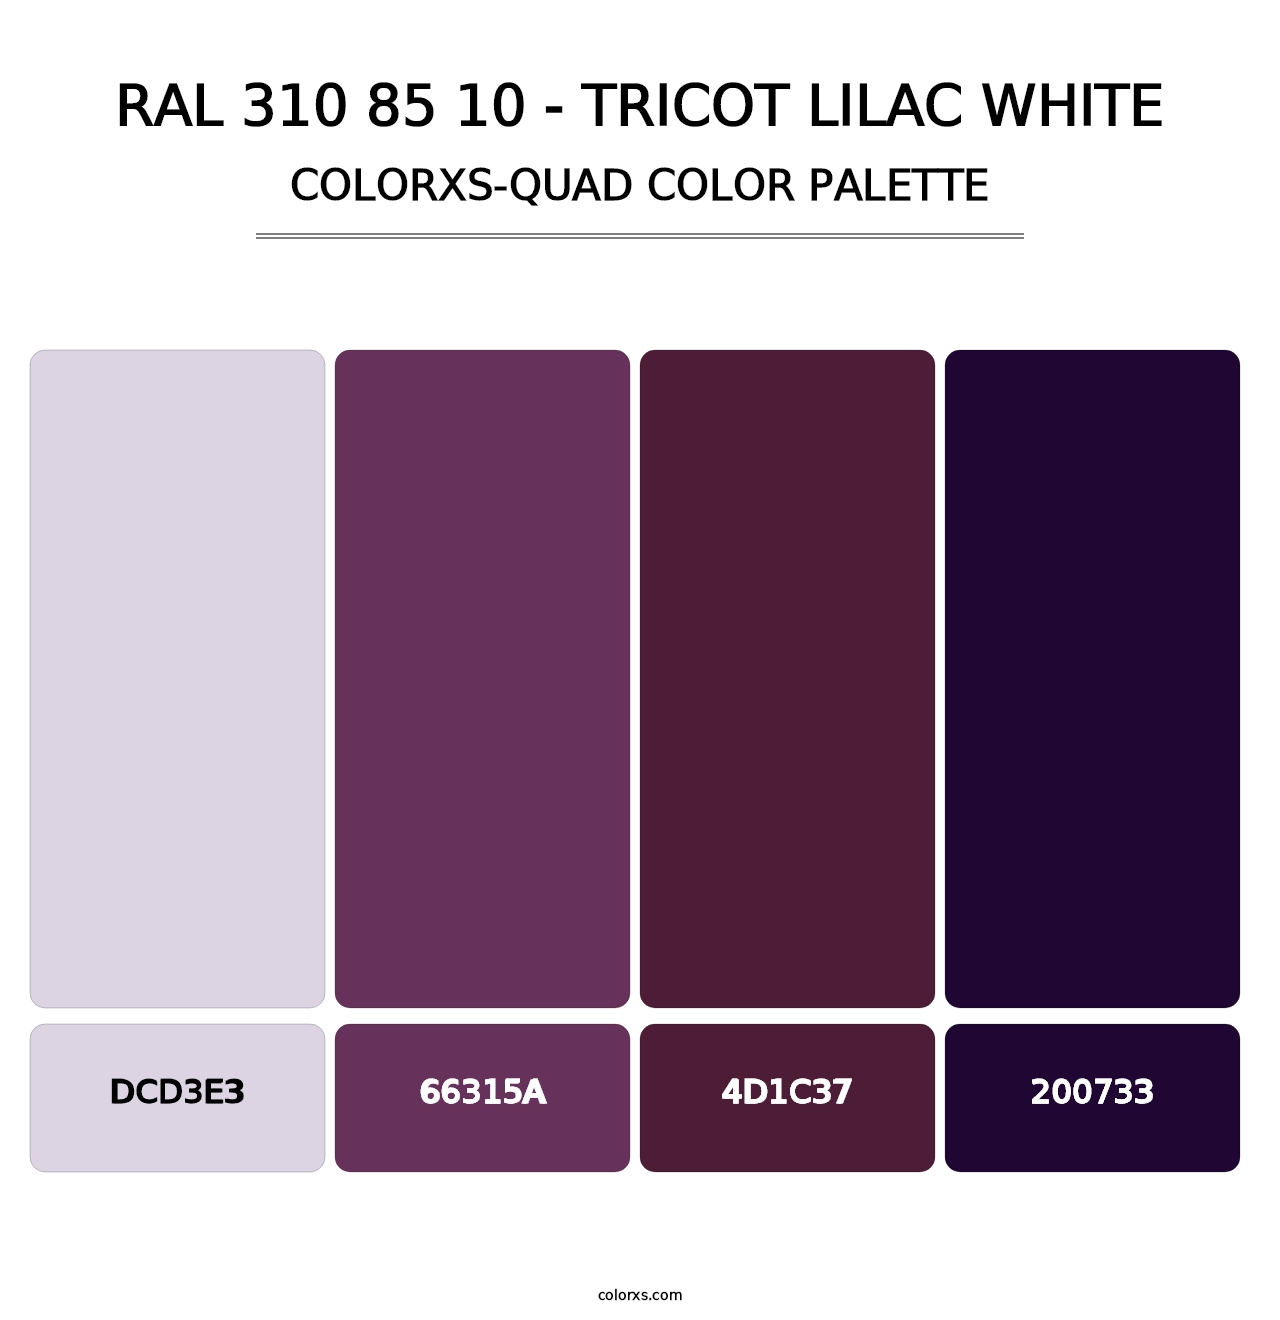 RAL 310 85 10 - Tricot Lilac White - Colorxs Quad Palette